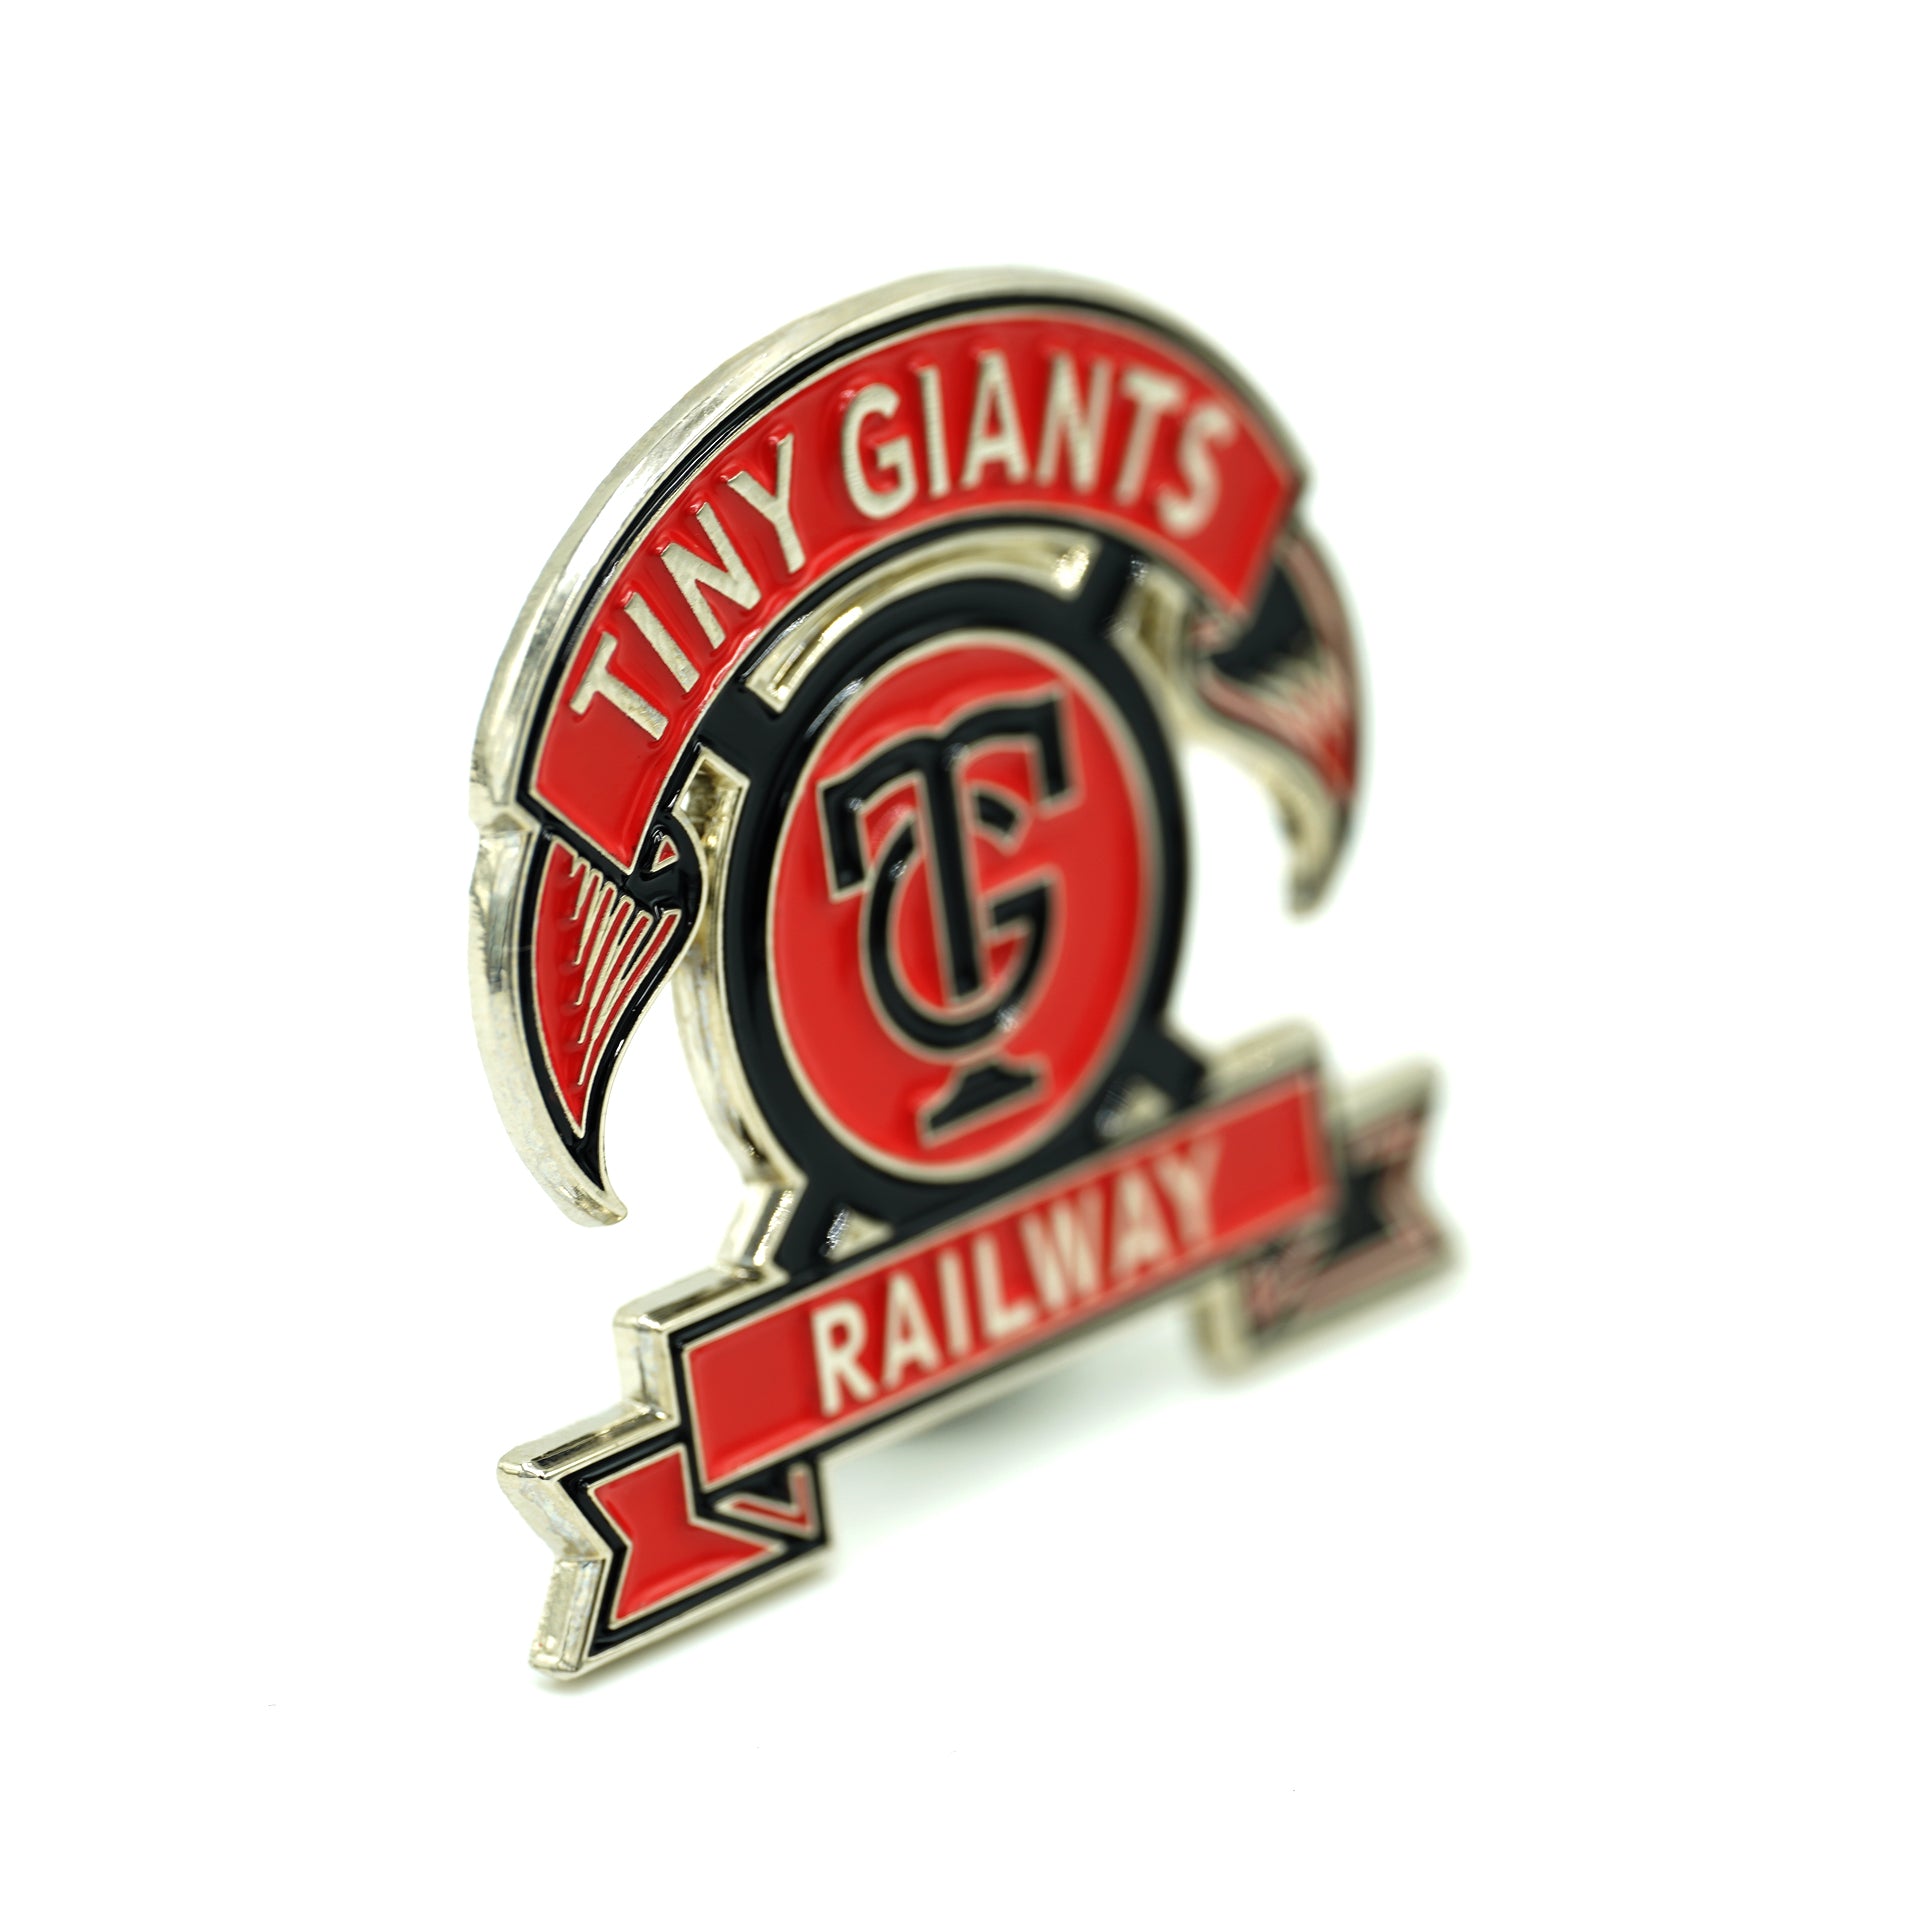 TINY GIANTS - RAILWAY